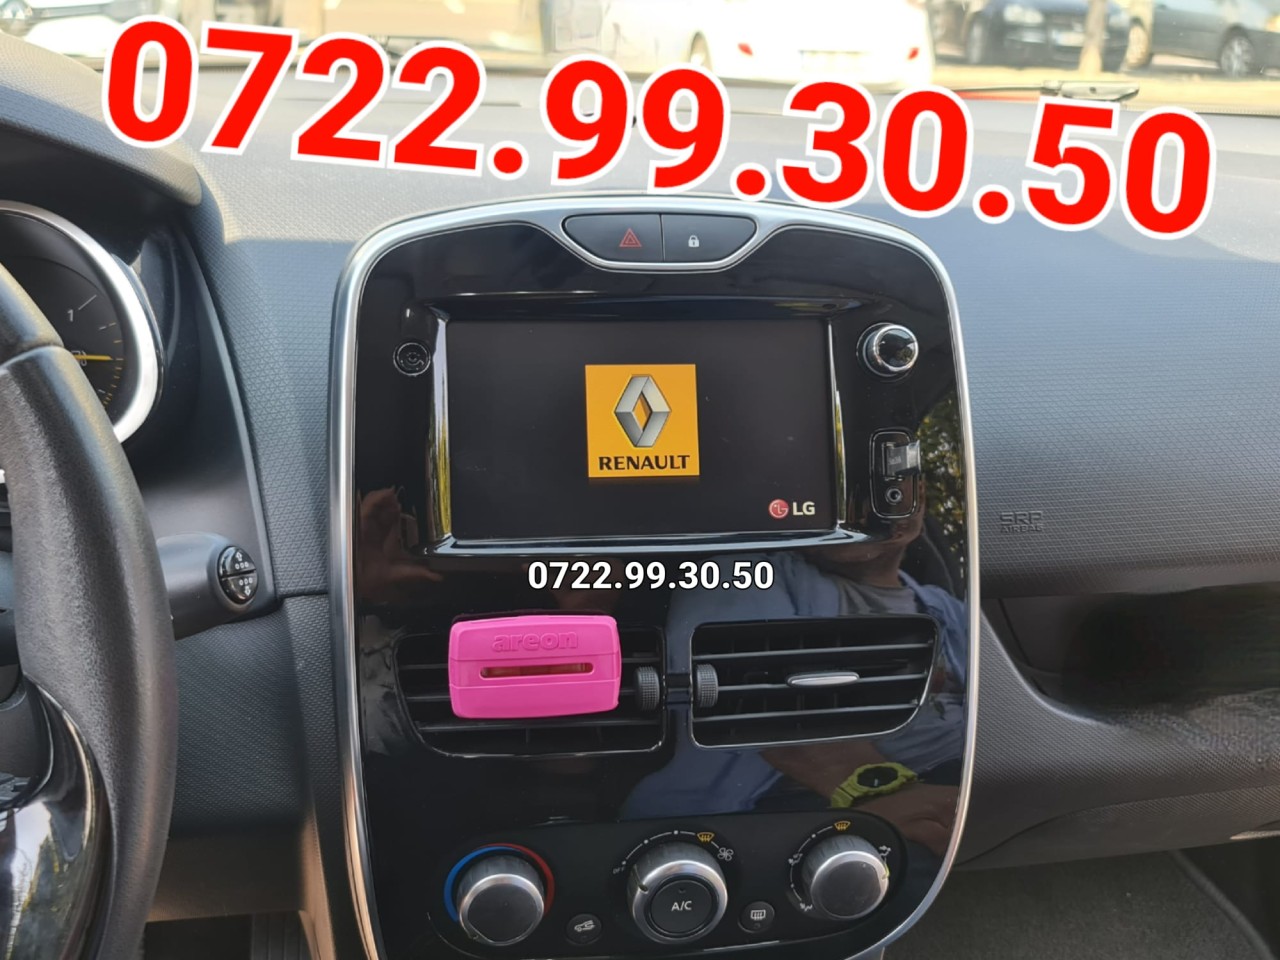 Montez Cameră Video Marsarier Renault Clio 4 Dacia Logan Lodgy Duster  #69995321